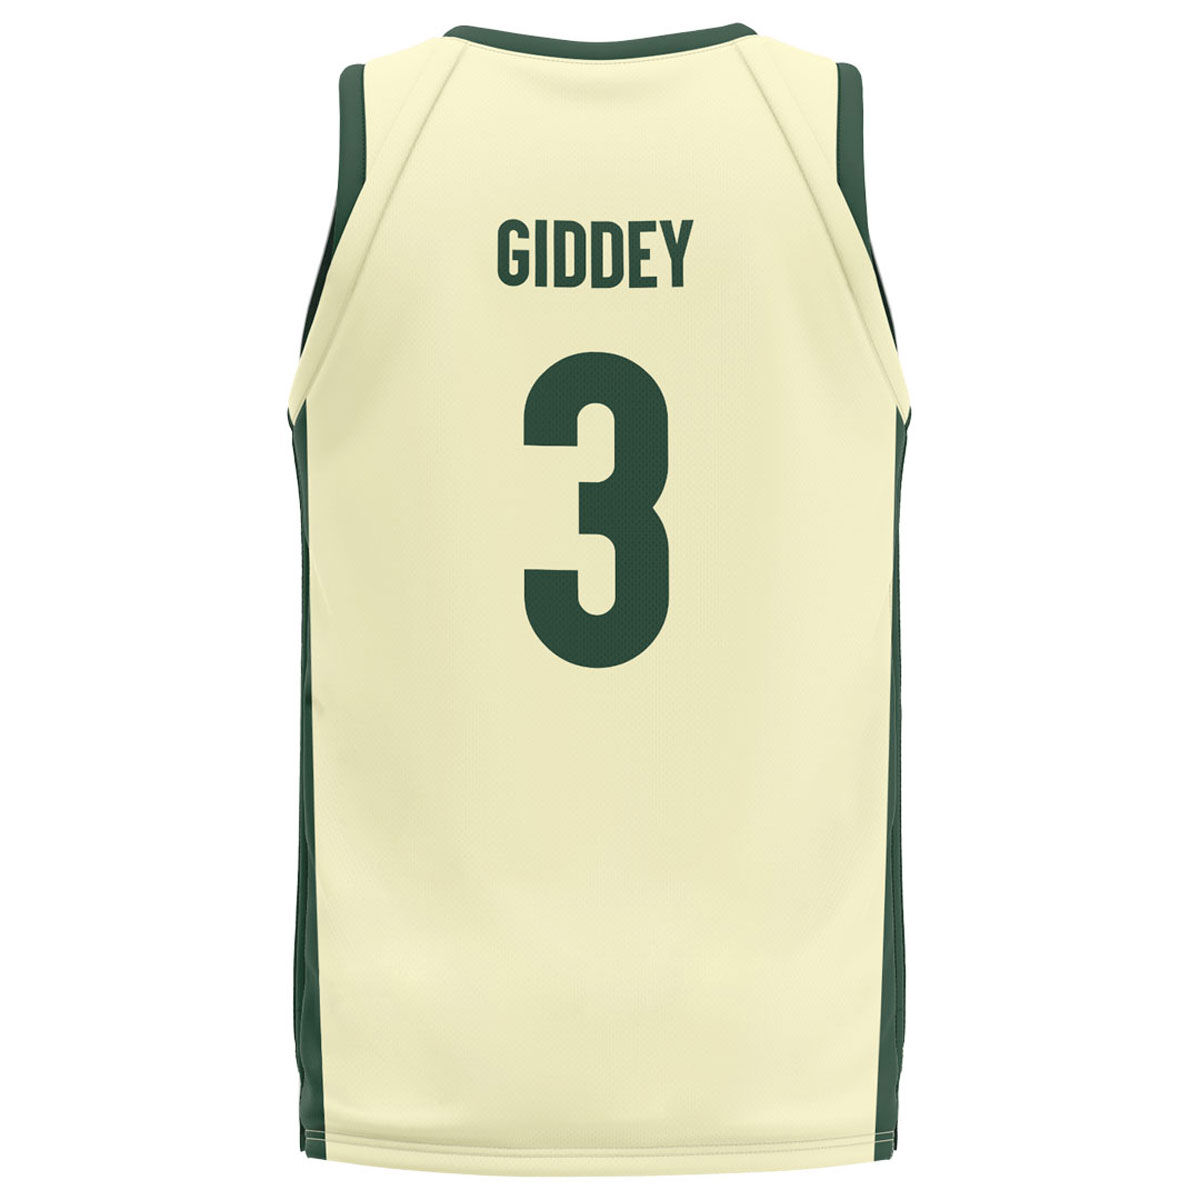 Retro Josh Giddey #6 #14 Green Yellow Team Australia Basketball Jerseys  Custom